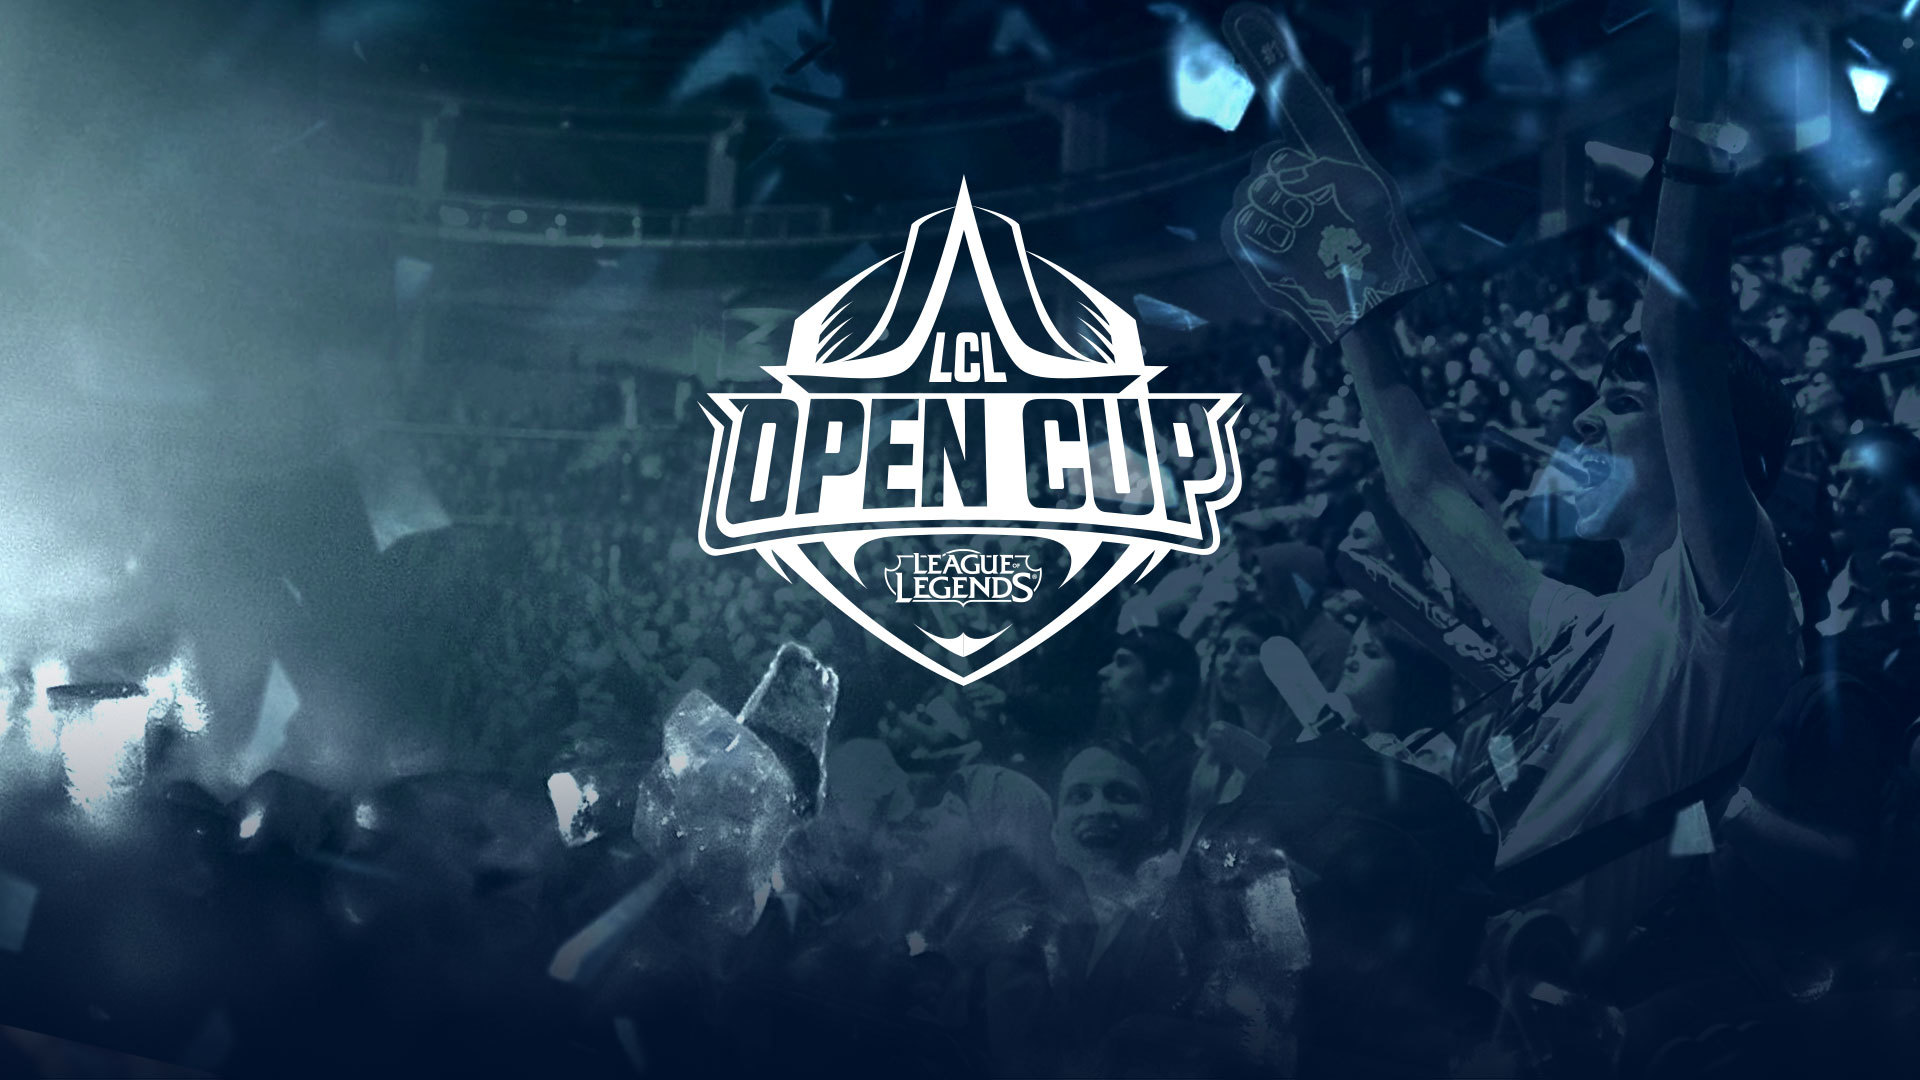 Ton start open league. Логотип open League. League of Legends турнир. Континентальная лига по League of Legends.